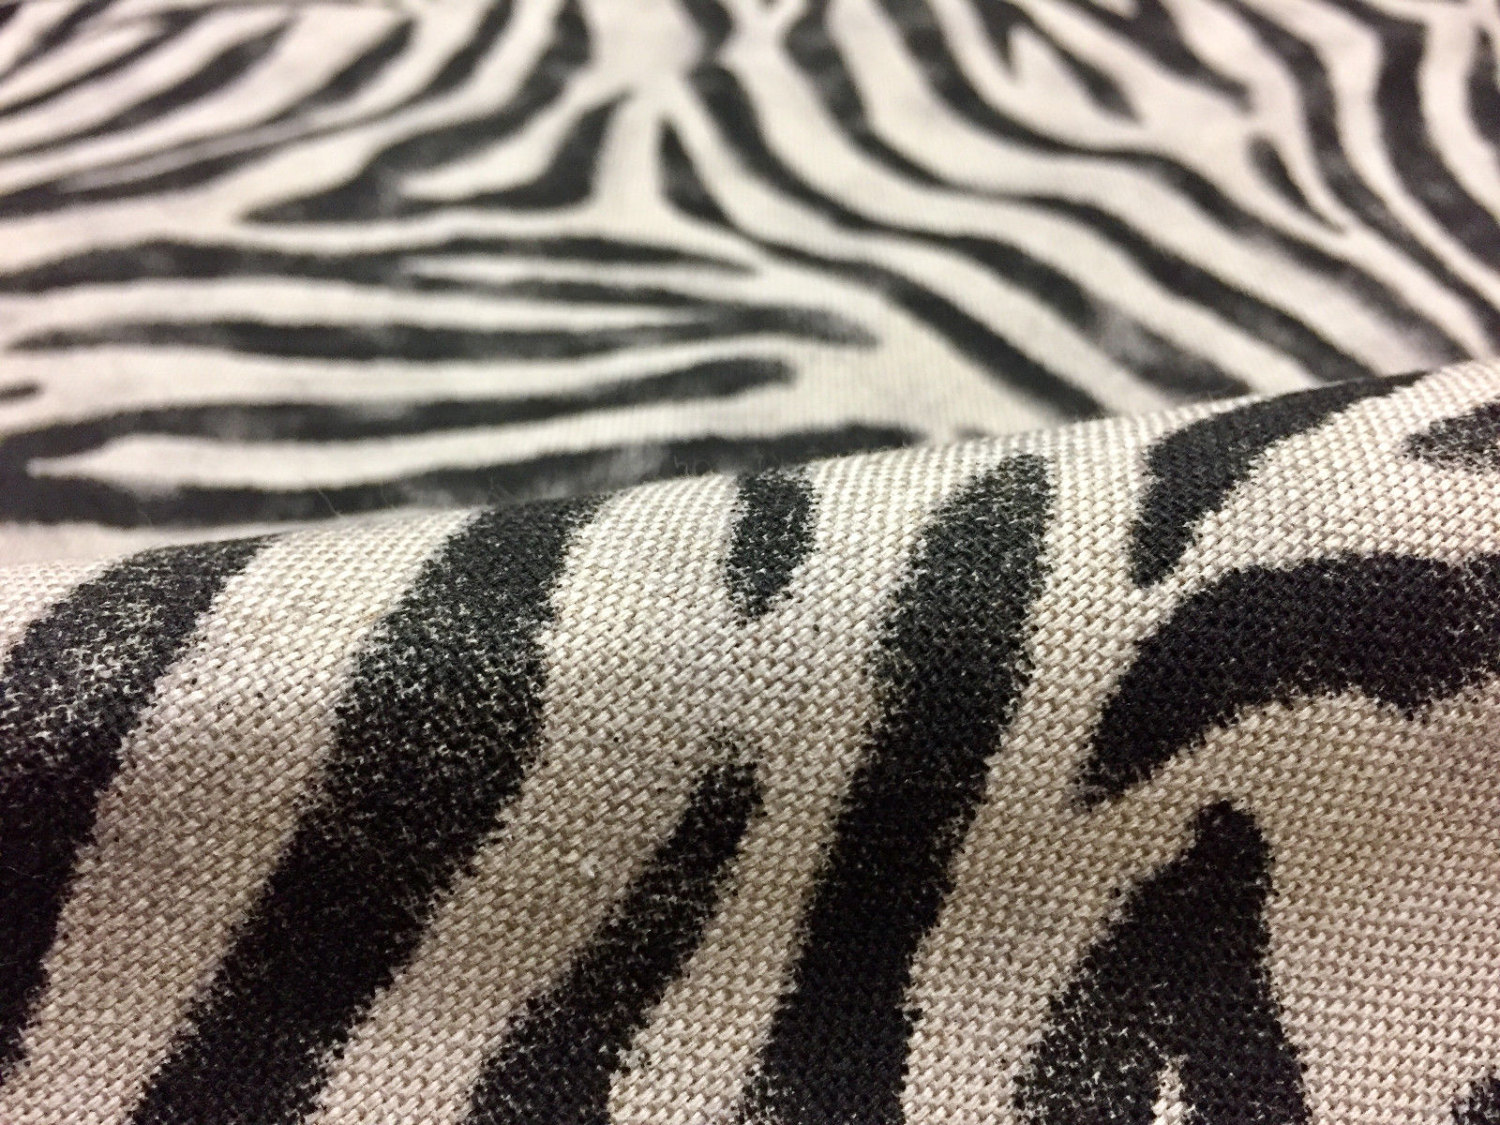 ZEBRA Animal Print Fabric - Linen Cotton Blend - curtains upholstery